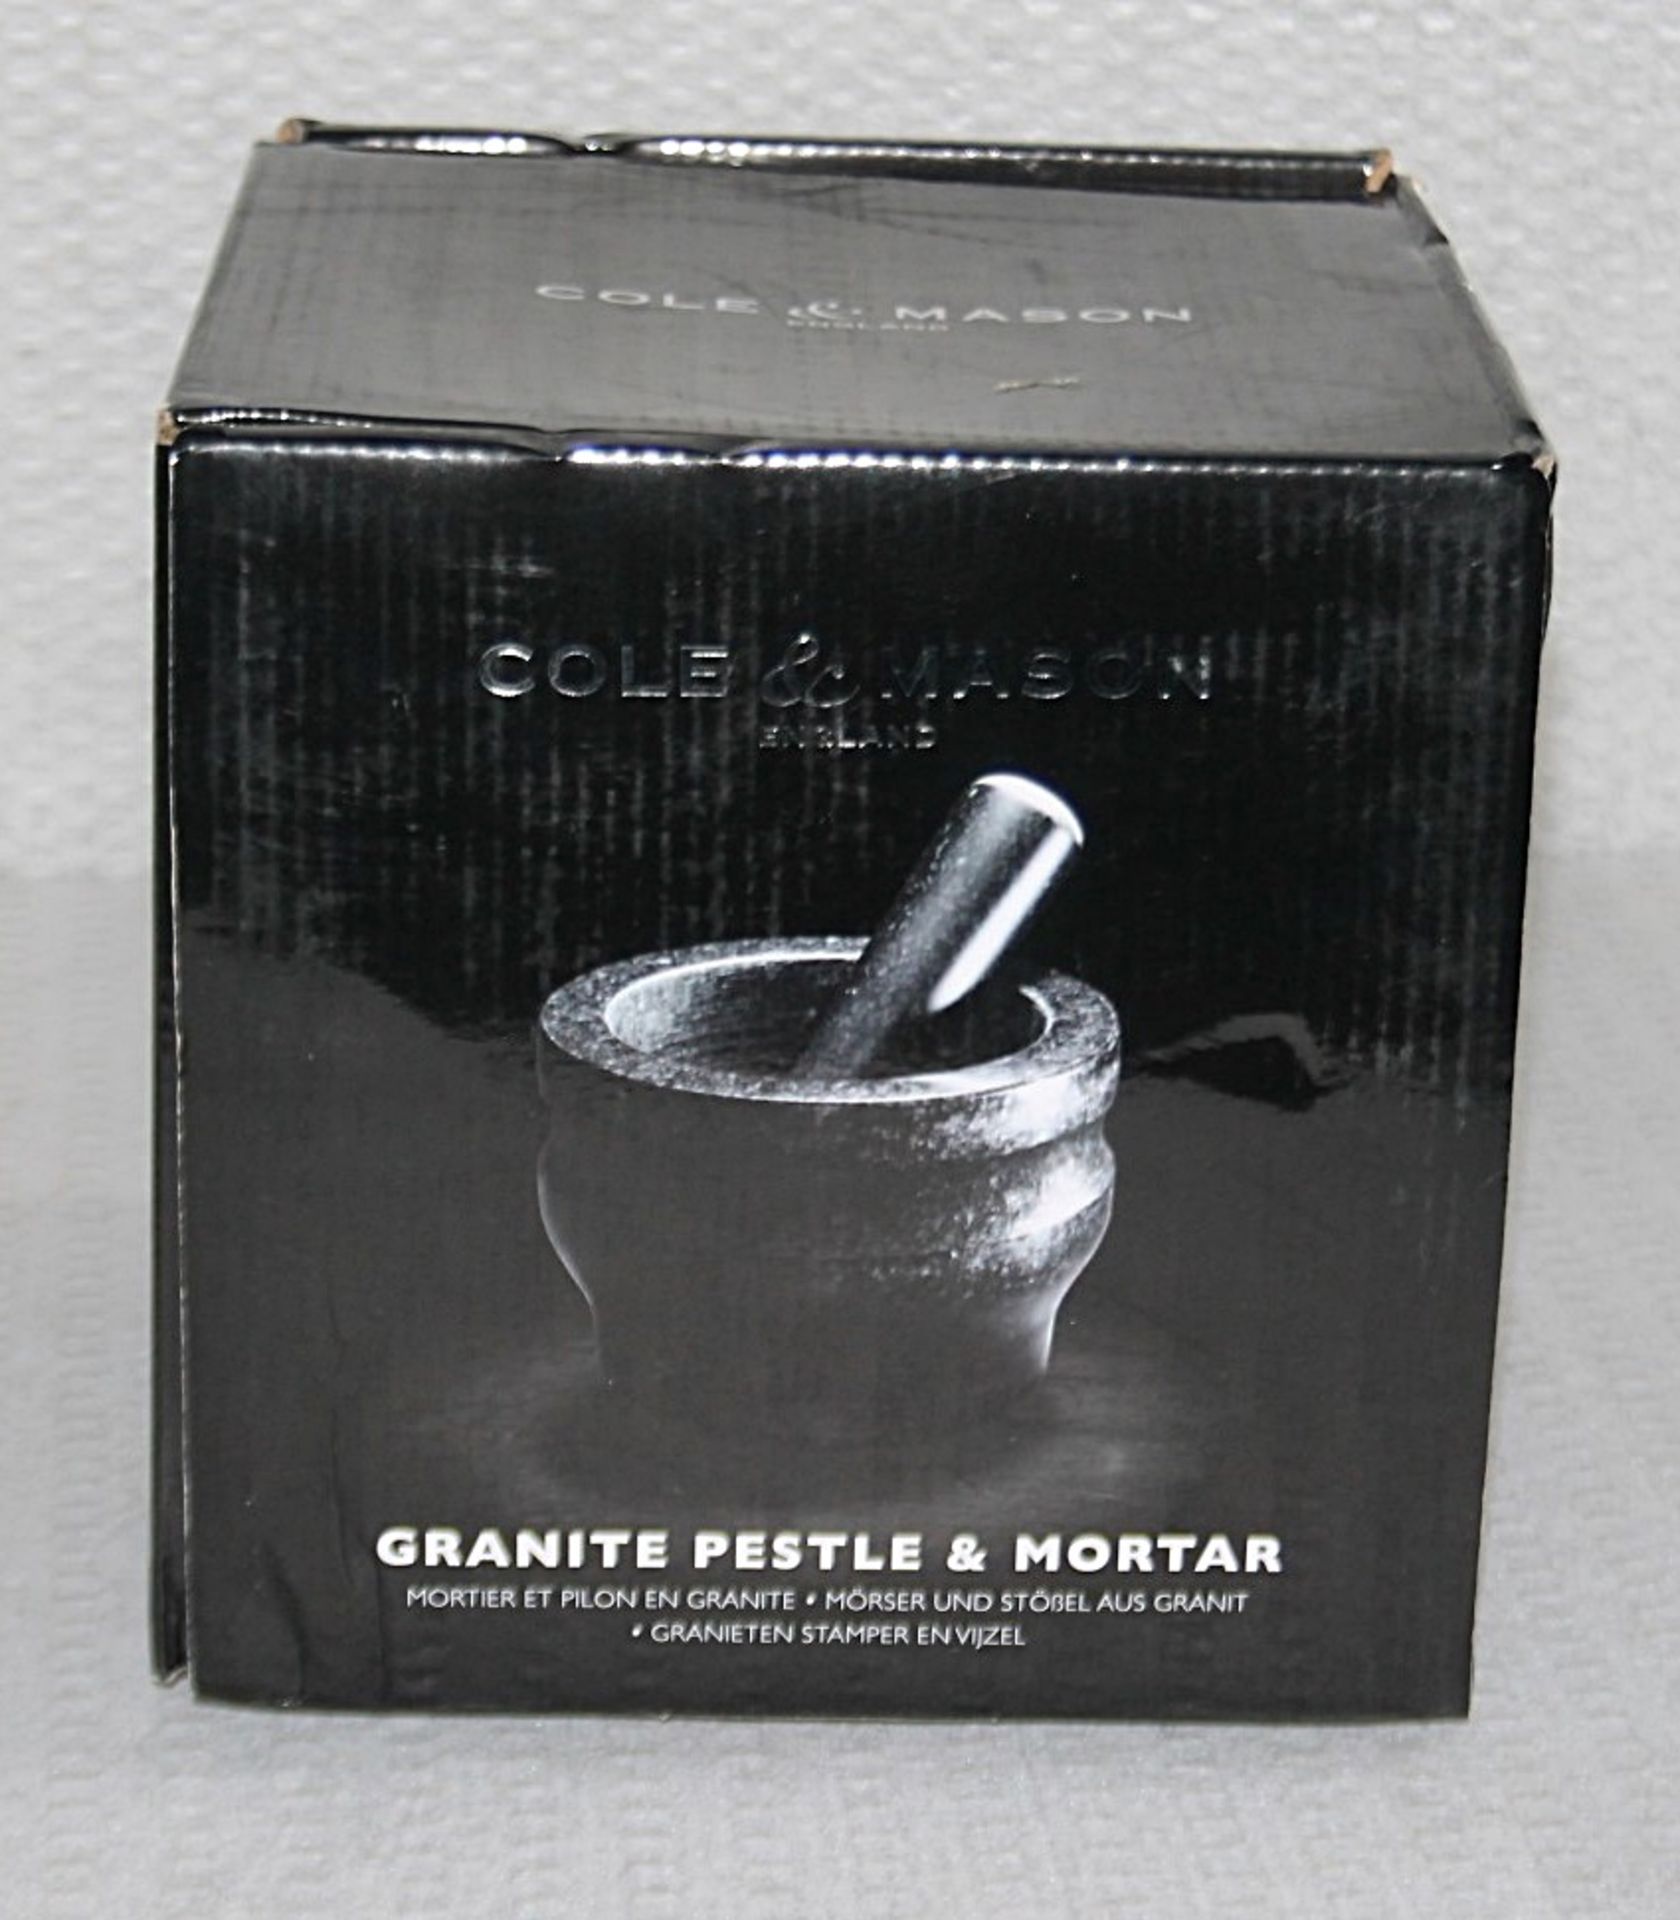 1 x COLE & MASON Granite Pestle and Mortar (18cm) - Dimensions: ø18cm x H12.5cm - Unused Boxed Stock - Image 2 of 7